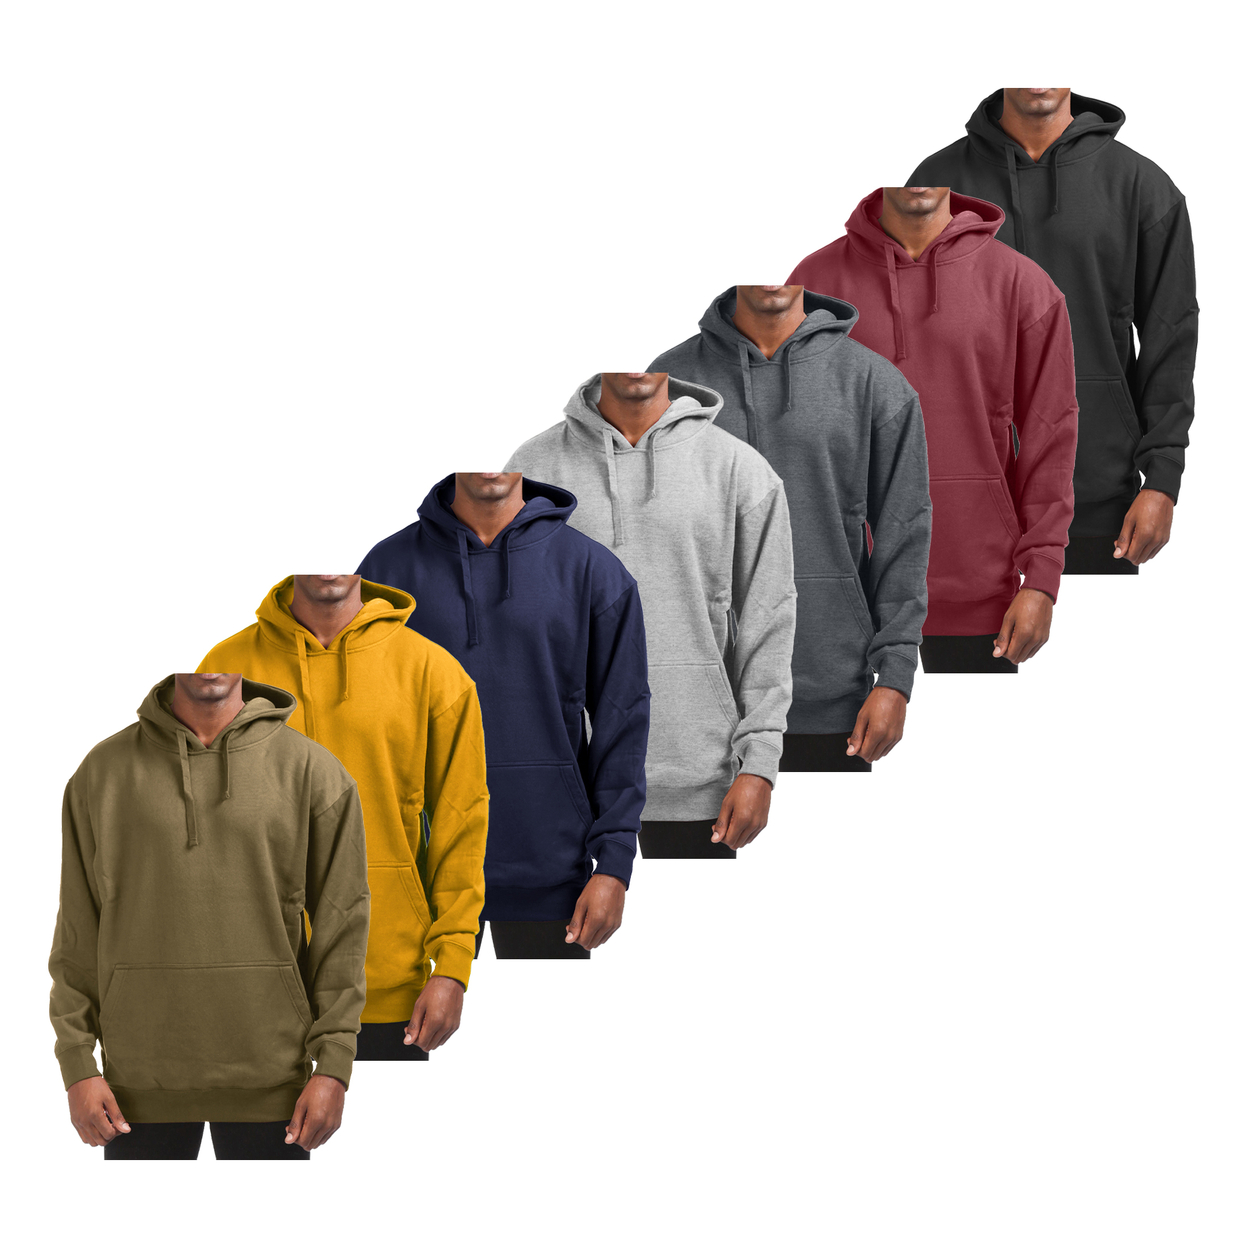 2-Pack: Men's Super-Soft Winter Warm Cotton-Blend Fleece Pullover Hoodie With Kangaroo Pocket - Black & Grey, Xx-large